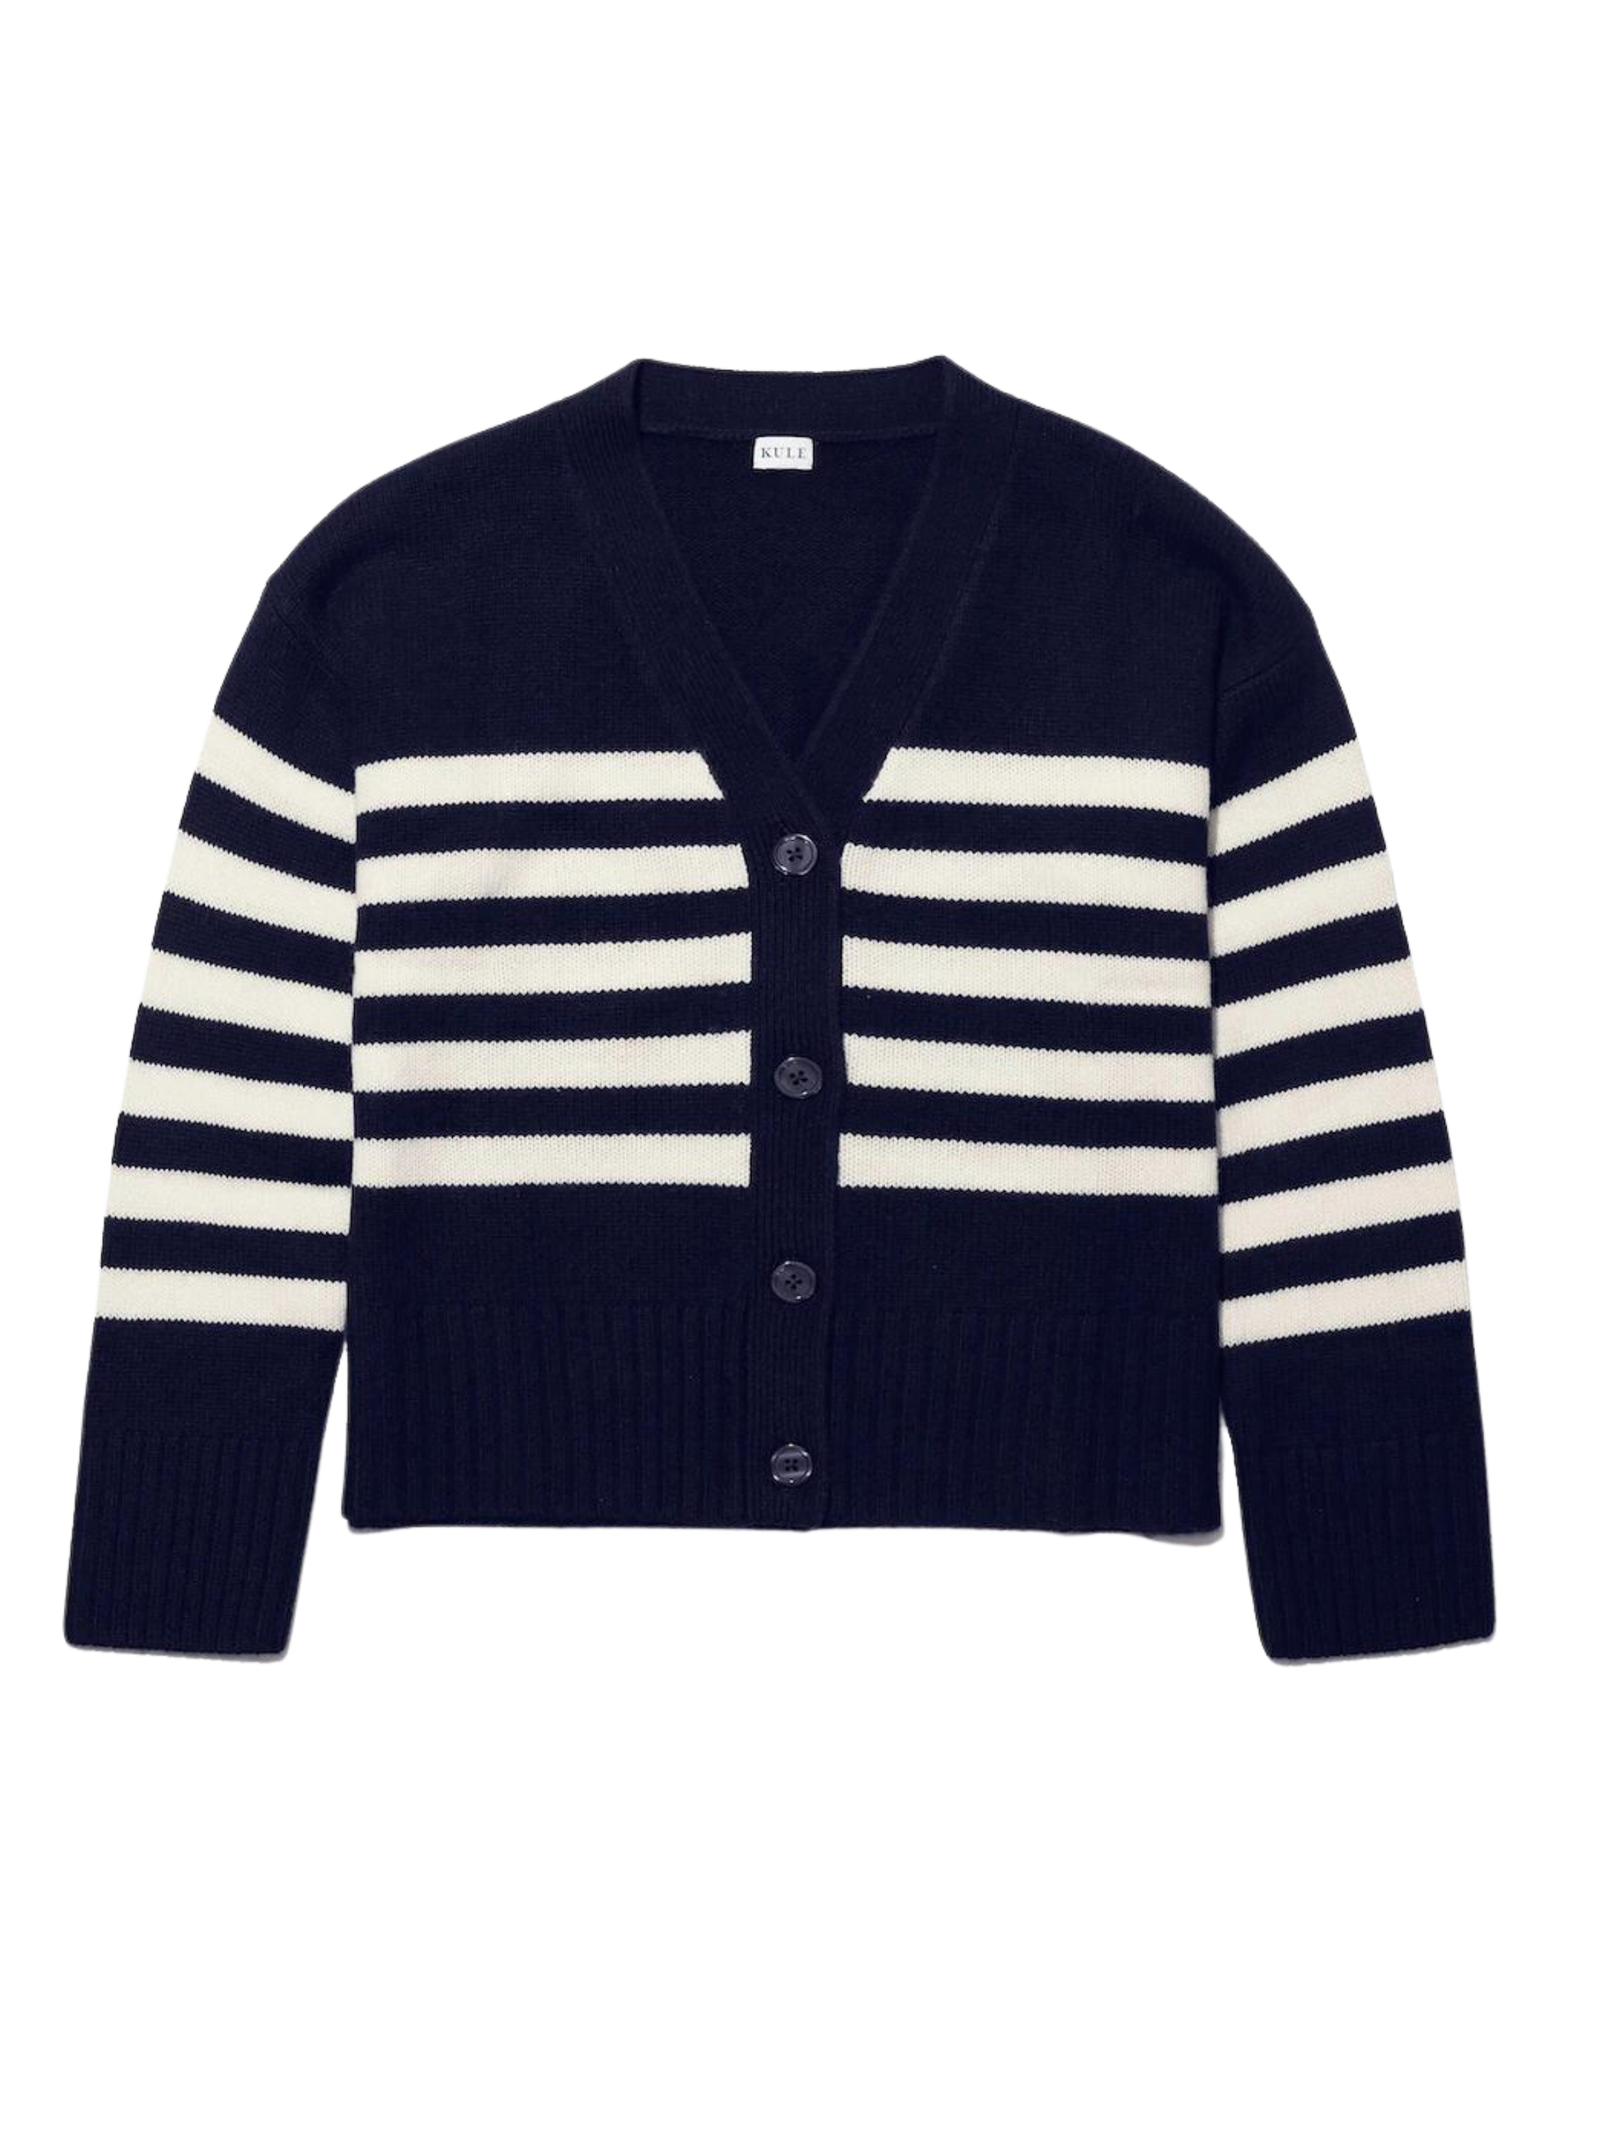 The Raffa Sweater- FINAL SALE